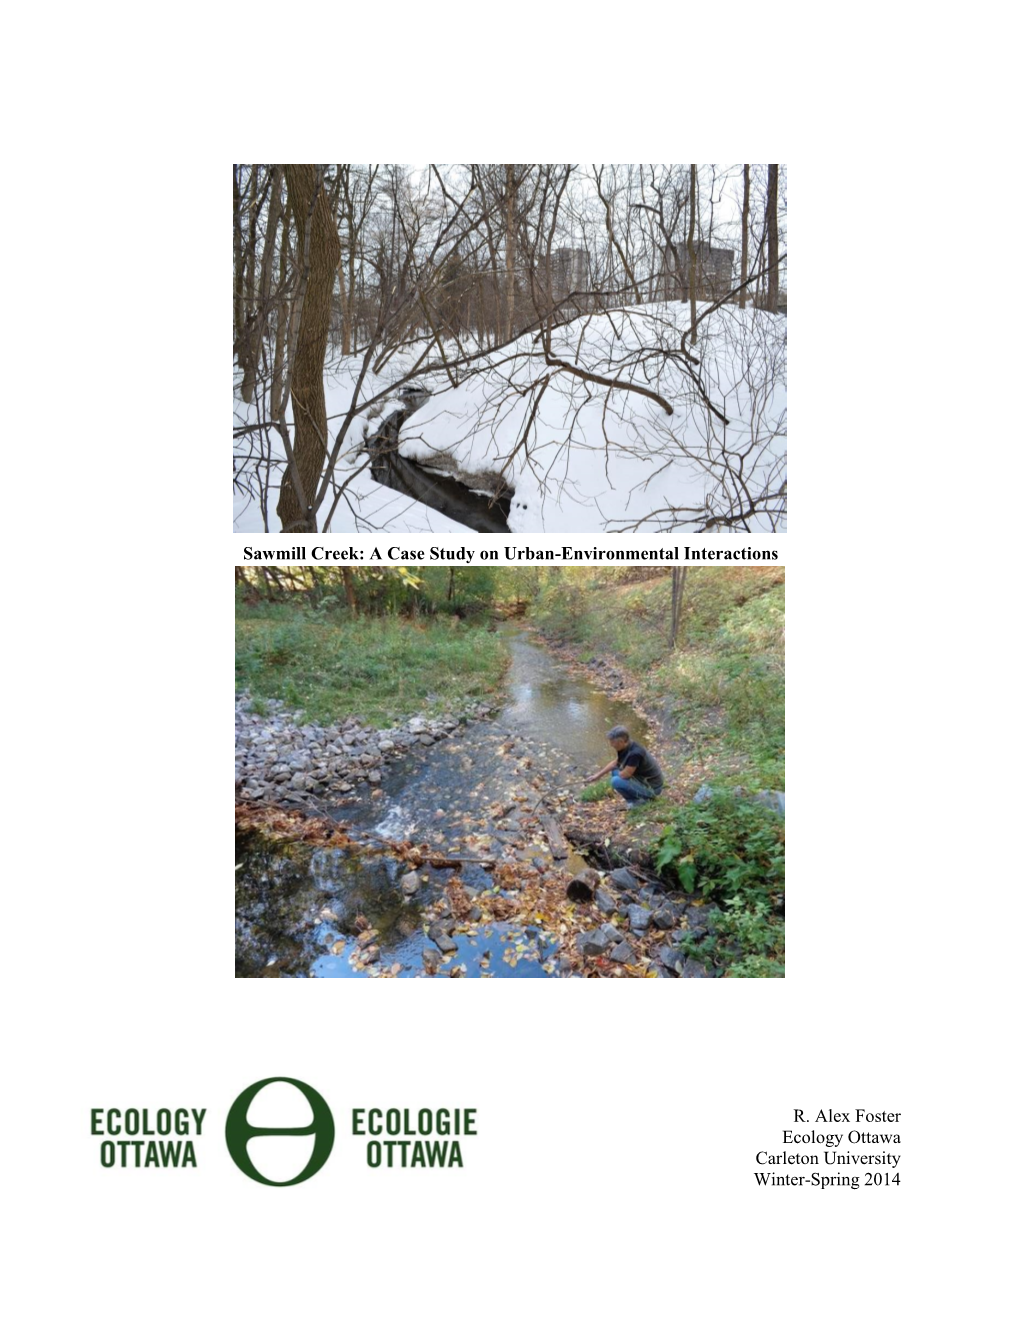 Sawmill Creek: a Case Study on Urban-Environmental Interactions